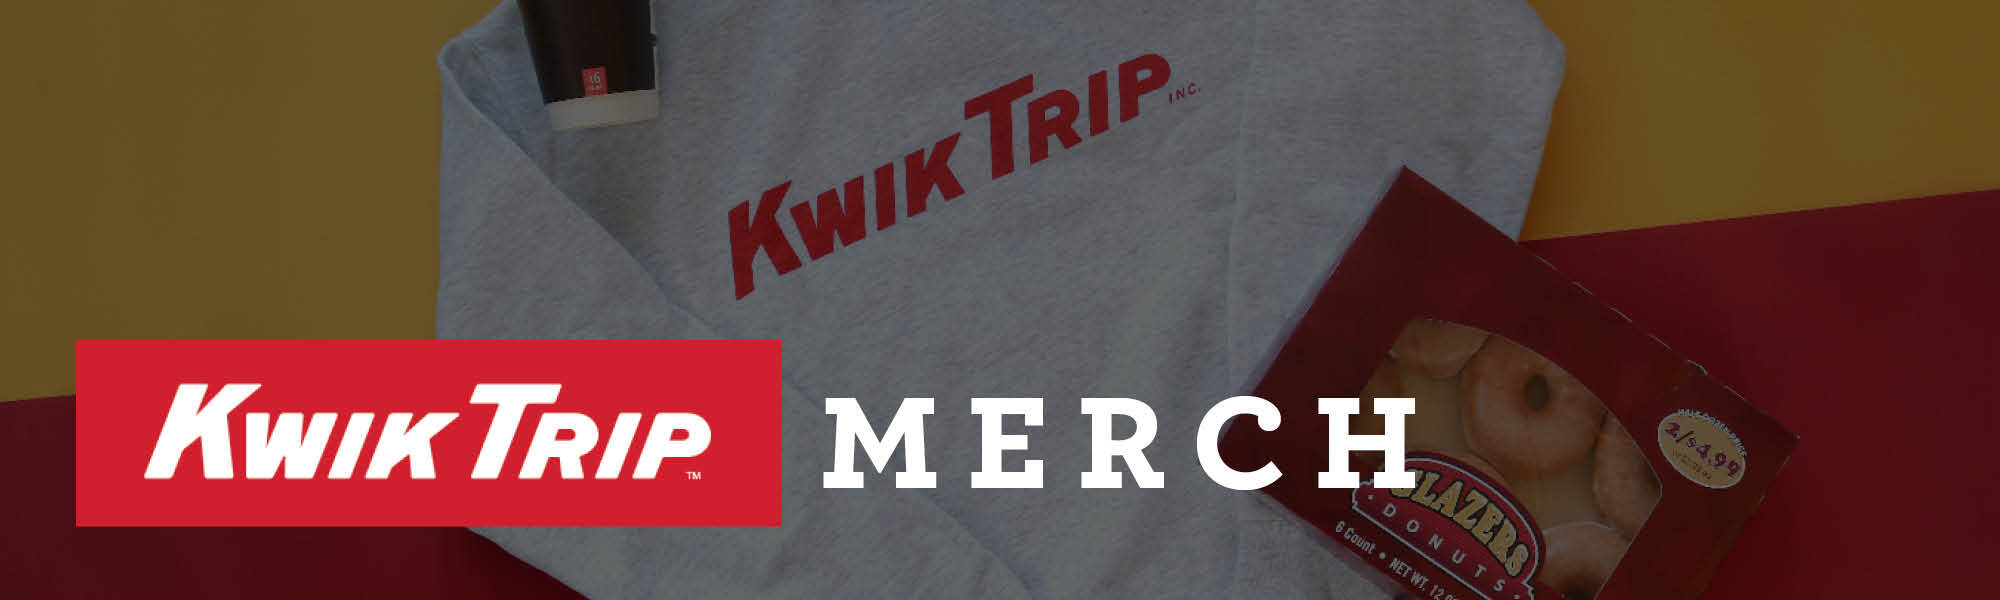 Kwik Trip / Kwik Star Merch Shop: New Products